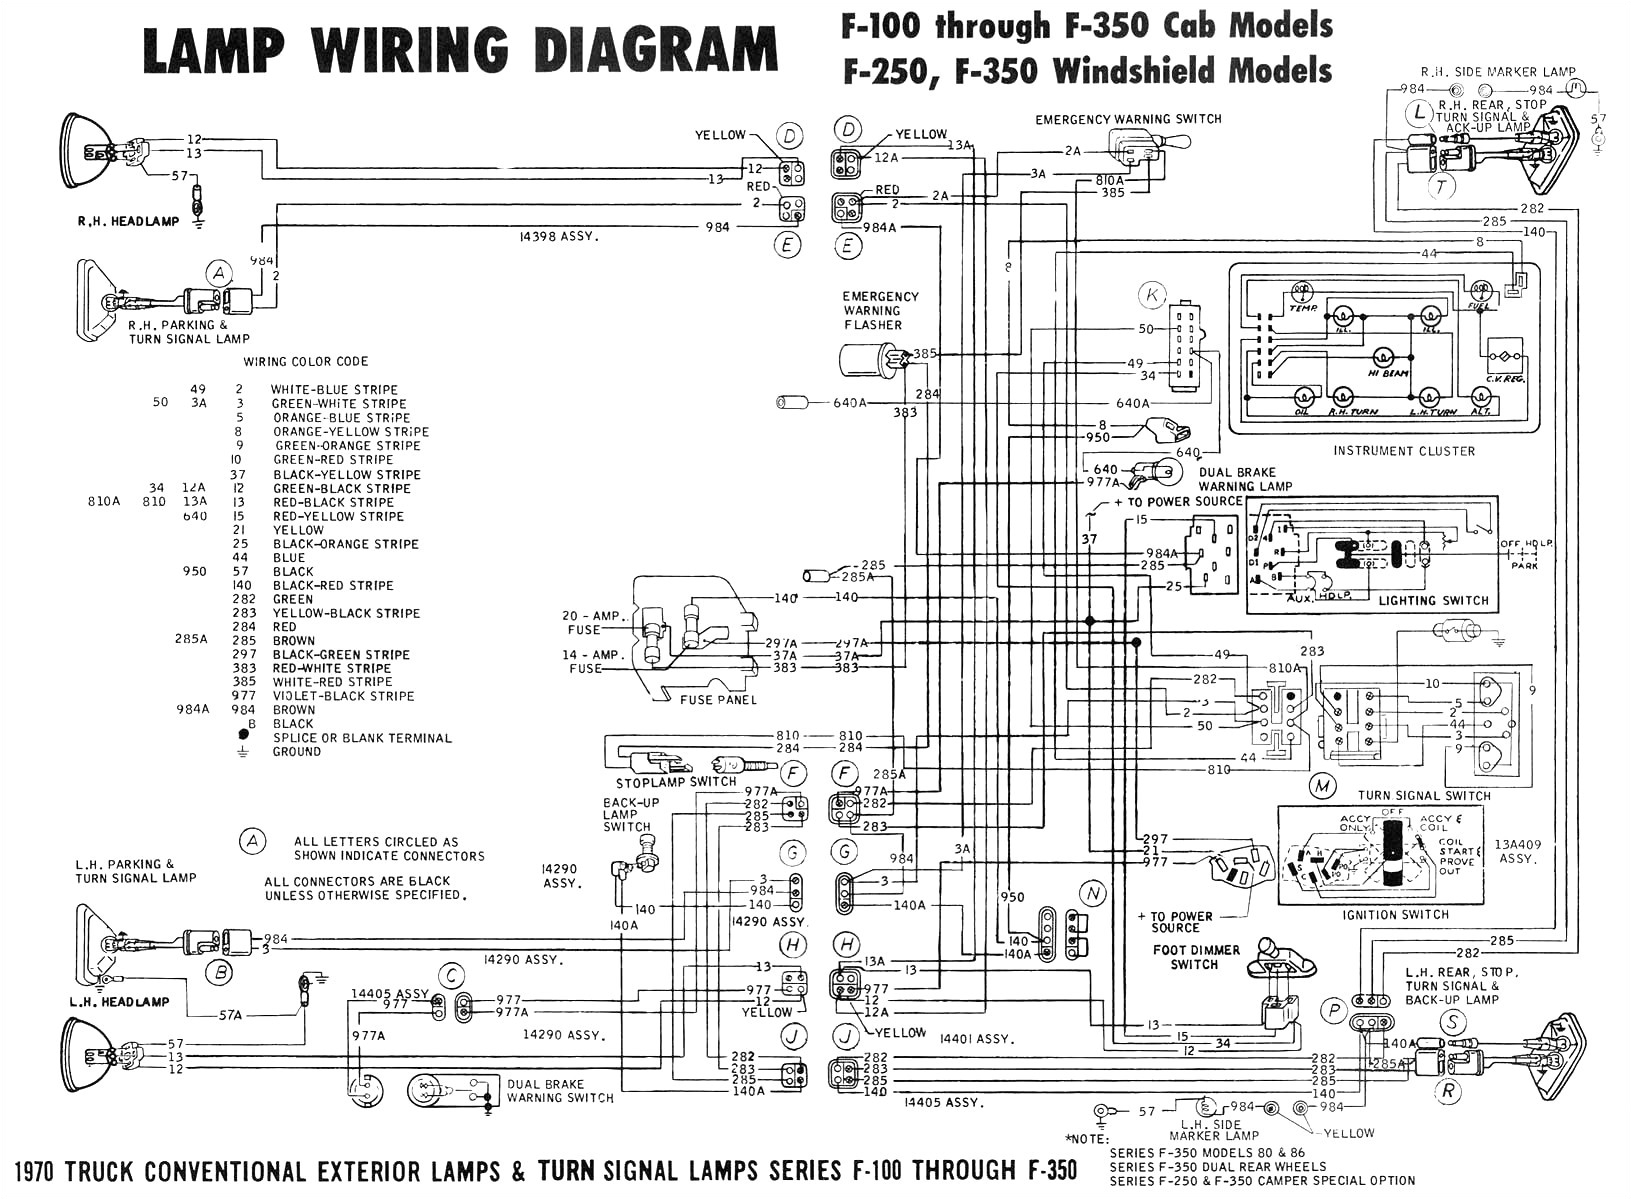 1968 f600 wiring diagram blog wiring diagram 1968 f600 wiring diagram data schematic diagram 1968 f600